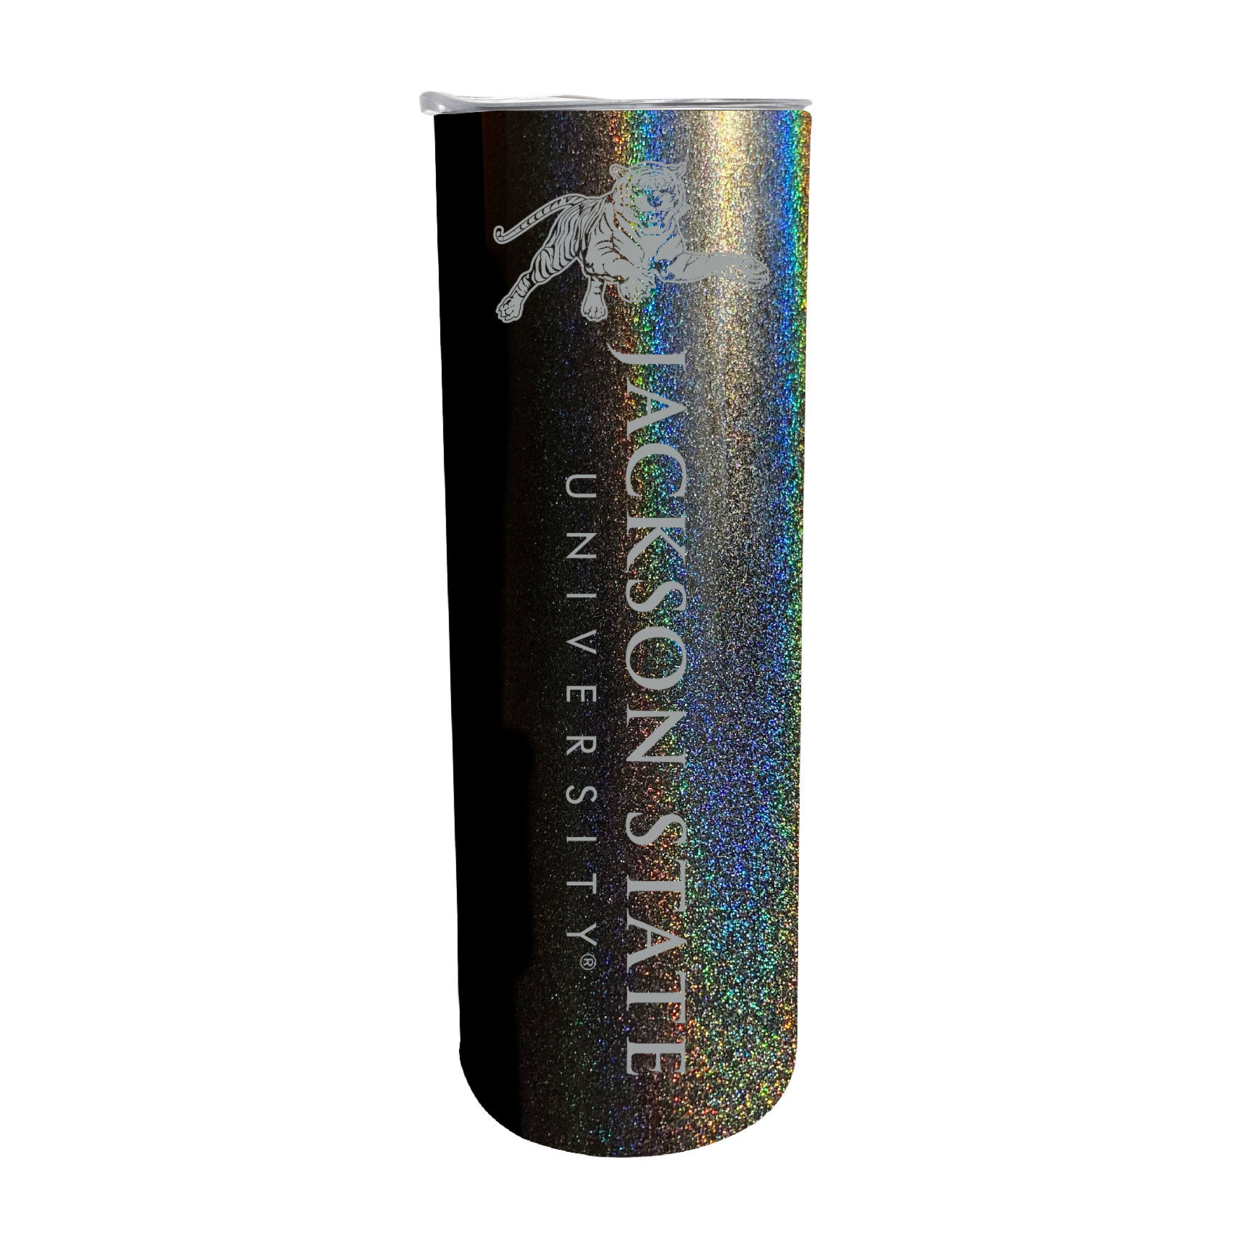 Jackson State University 20oz Insulated Stainless Steel Skinny Tumbler - Rainbow Glitter Black